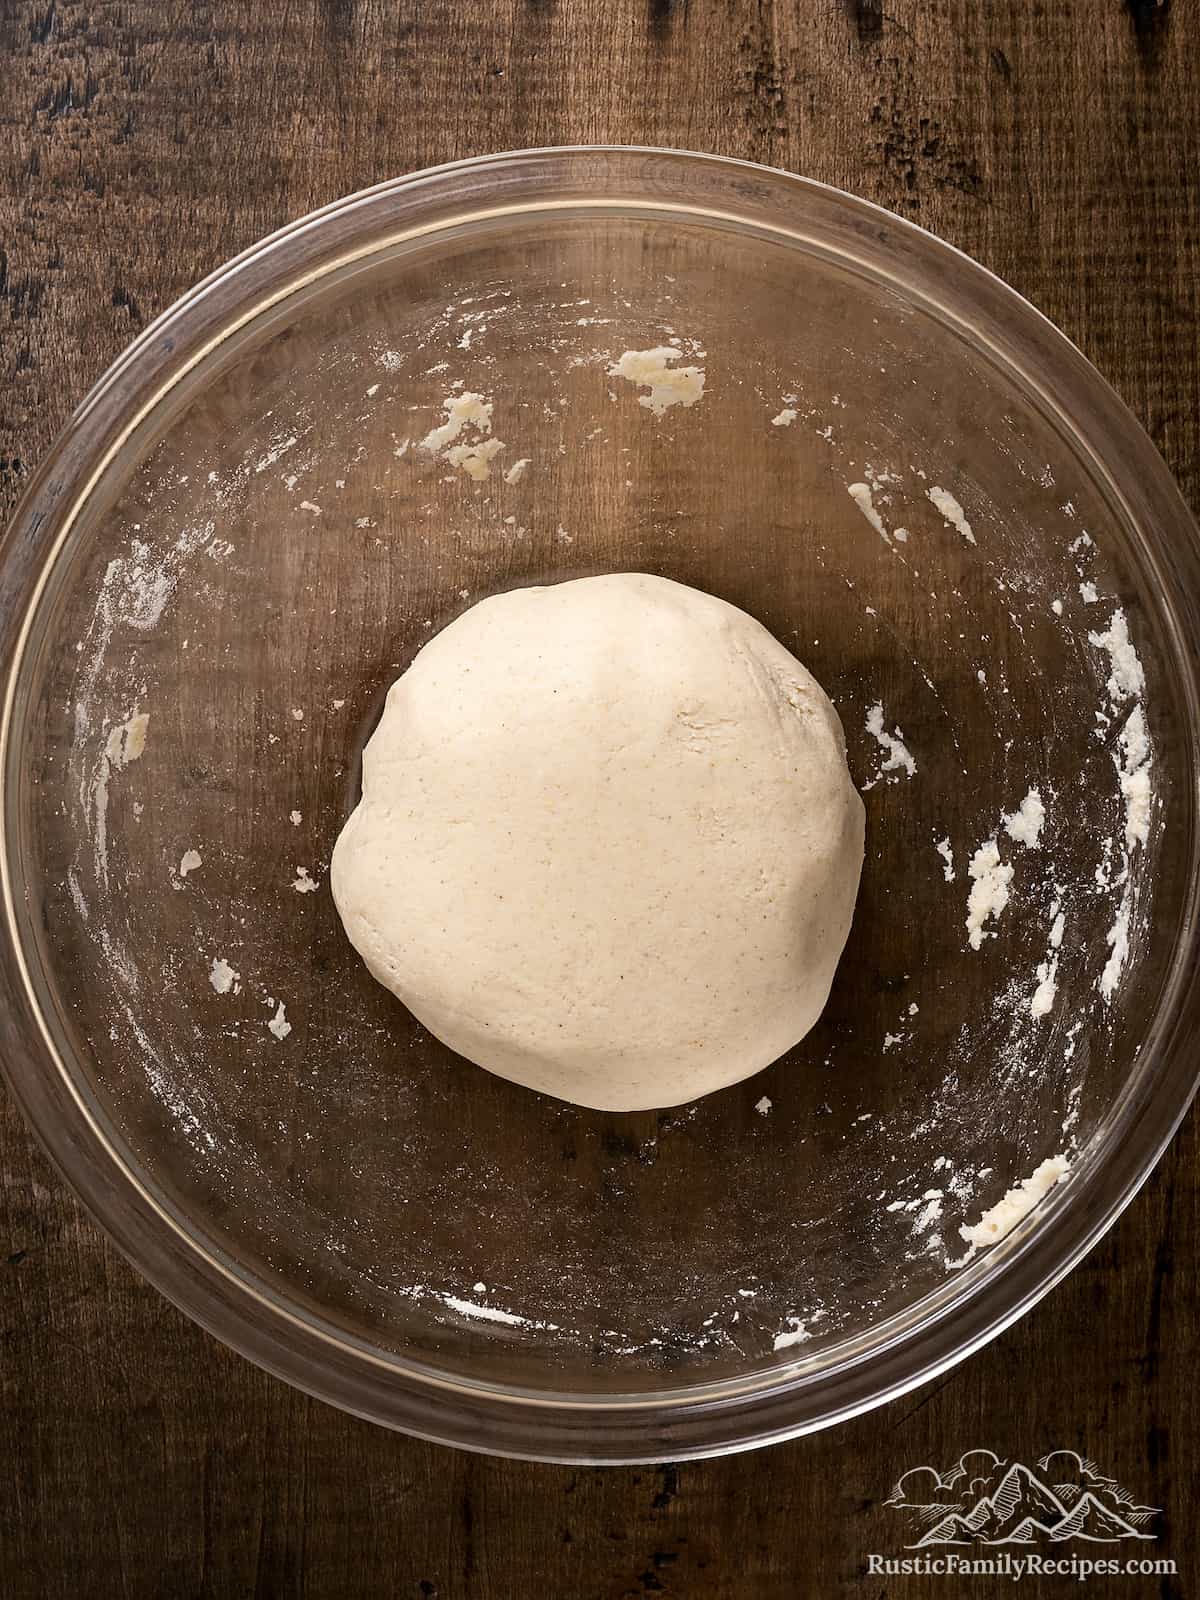 A ball of masa dough in a glass bowl.